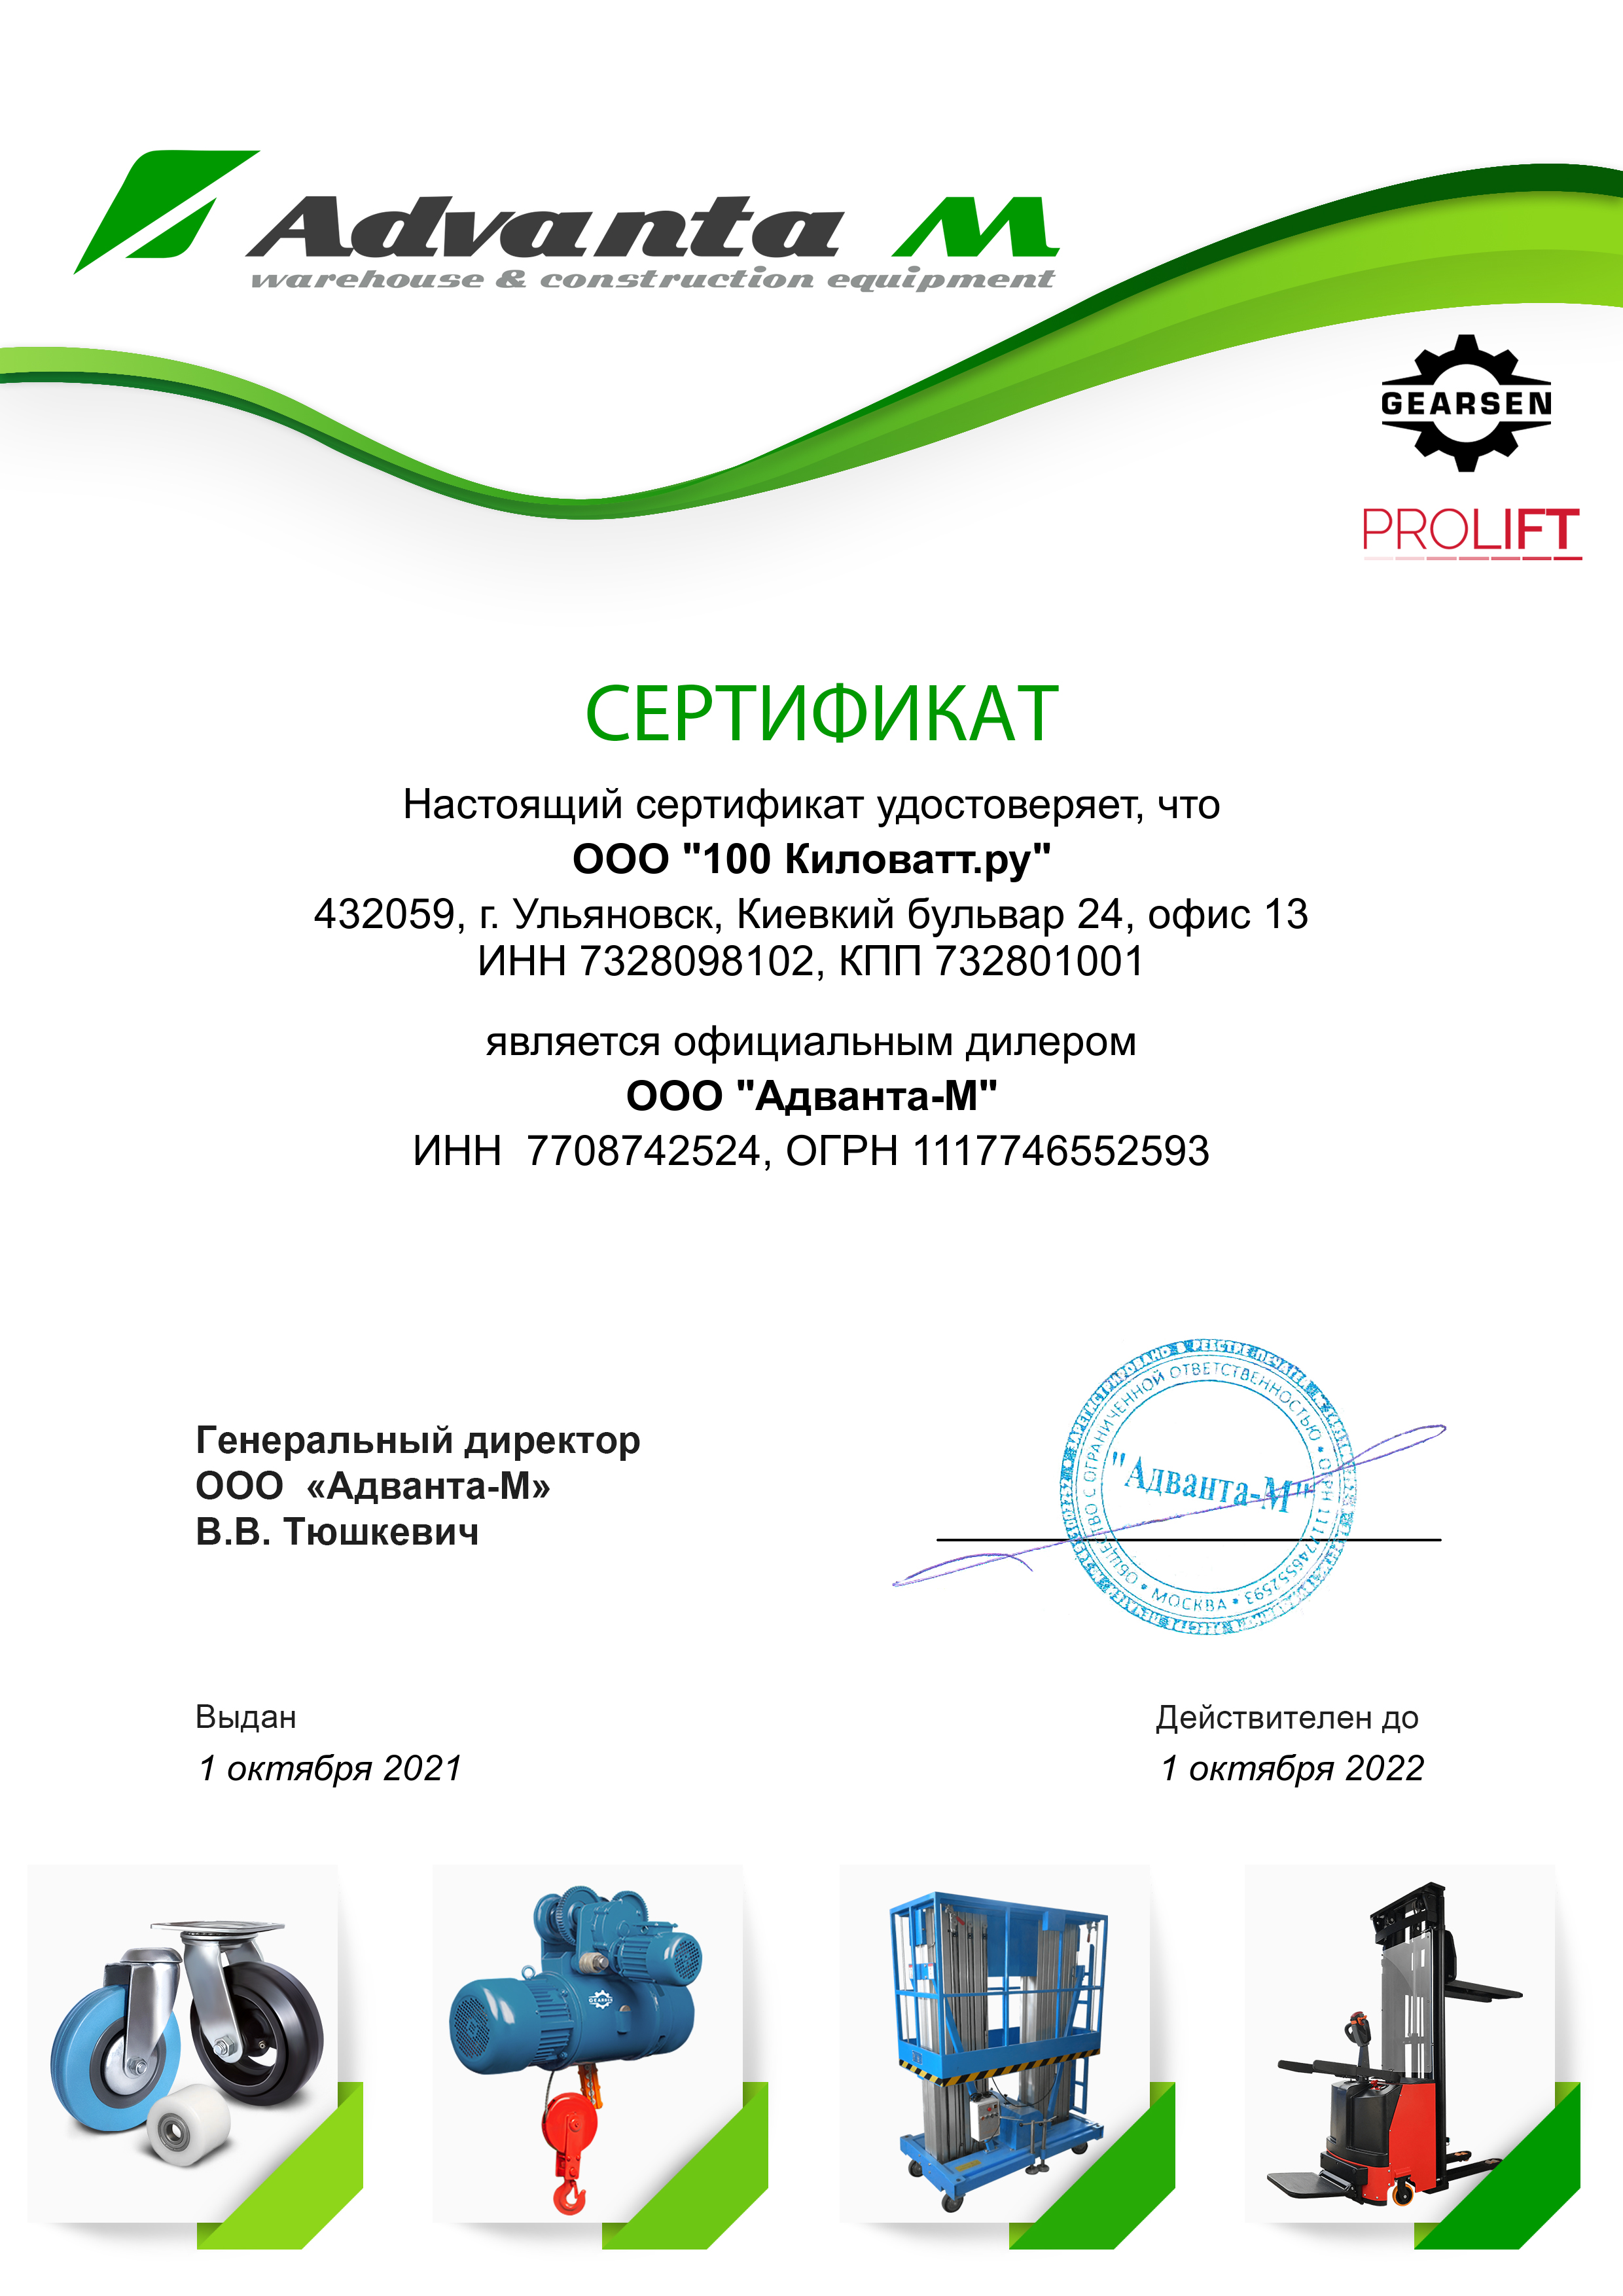 PROLIFT - Сертификат дилера